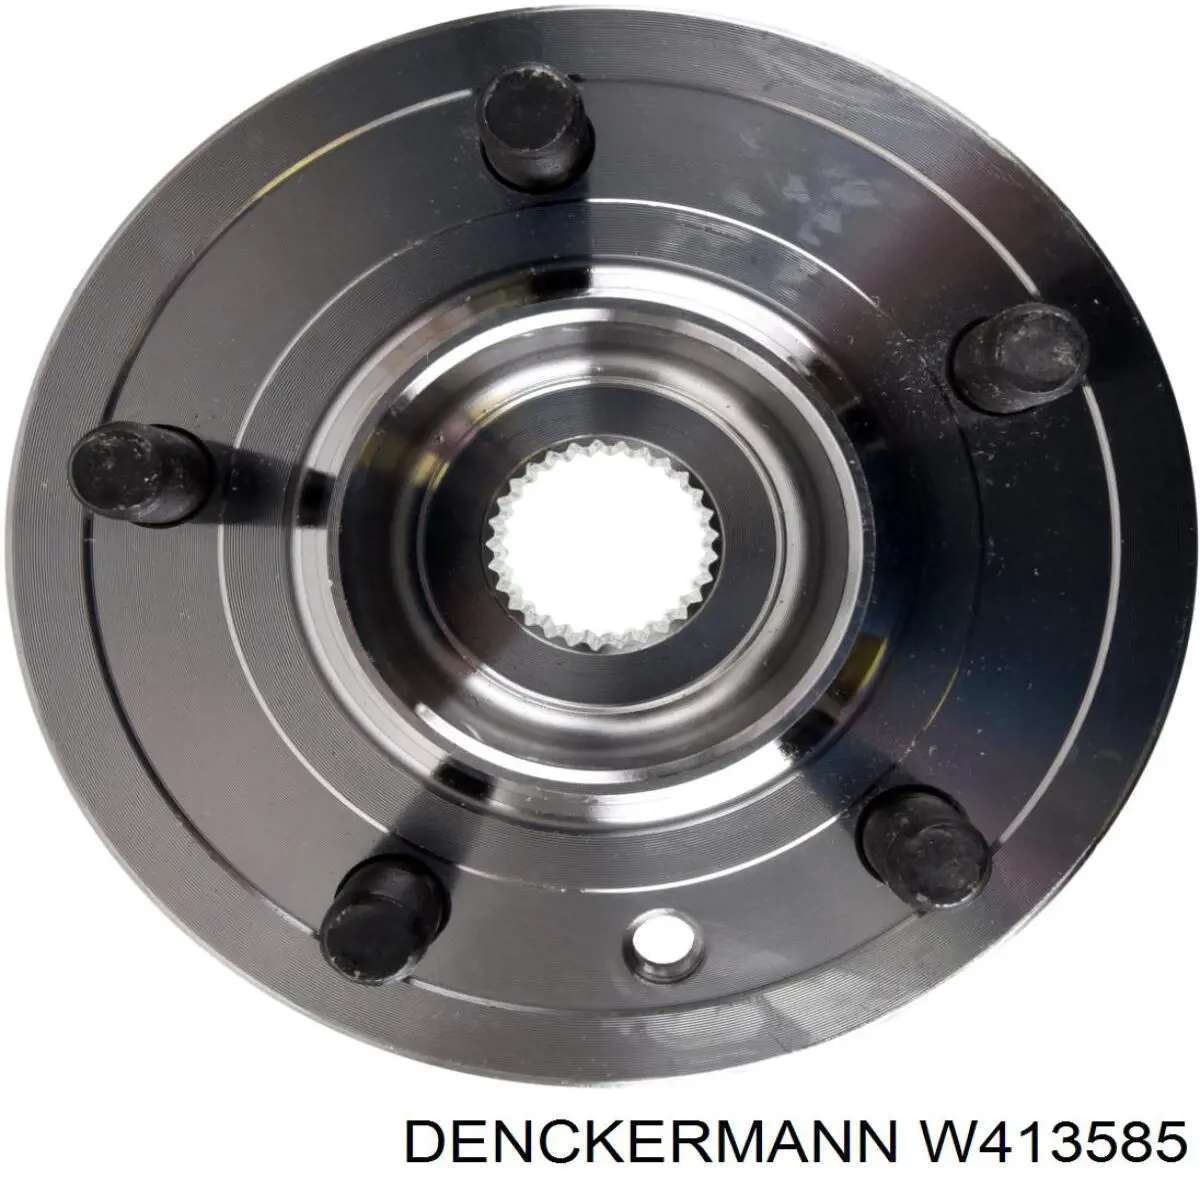 W413585 Denckermann cubo de rueda delantero